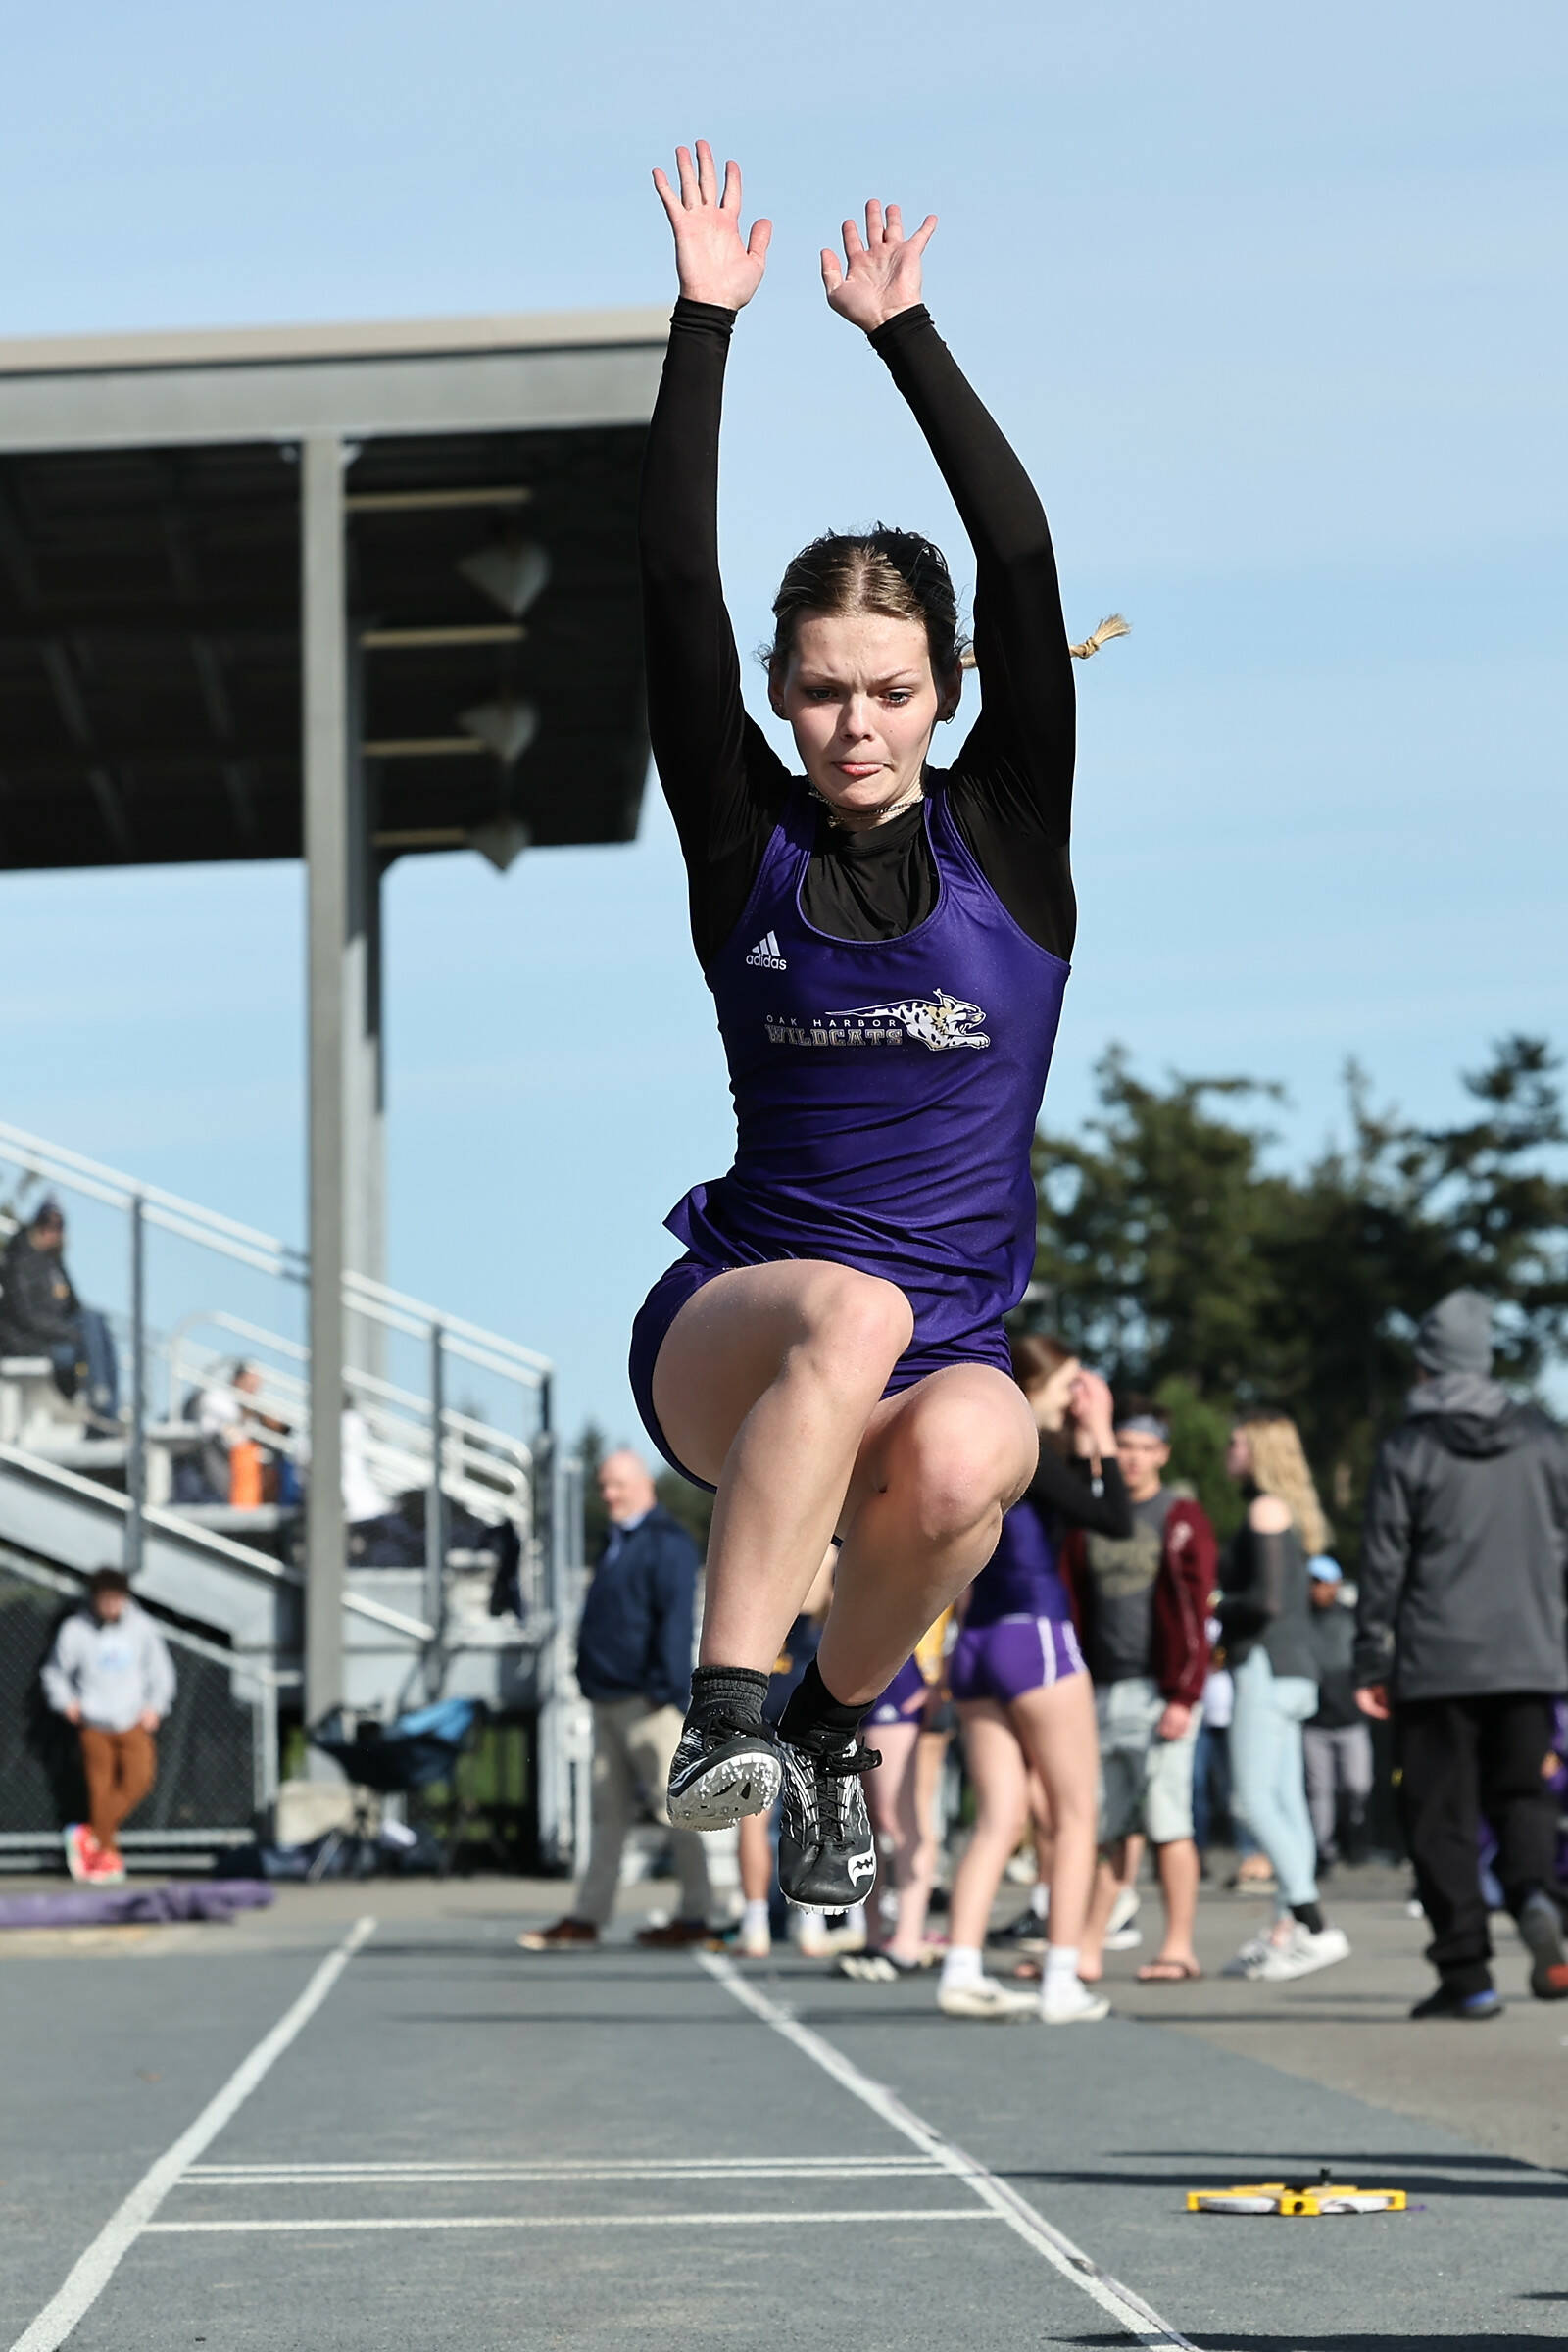 Verity Merth lands a jump at a March 19 track meet against Burlington. The Oak Harbor High School varsity girls team won 96.83 to 53.16. (Photo by John Fisken)